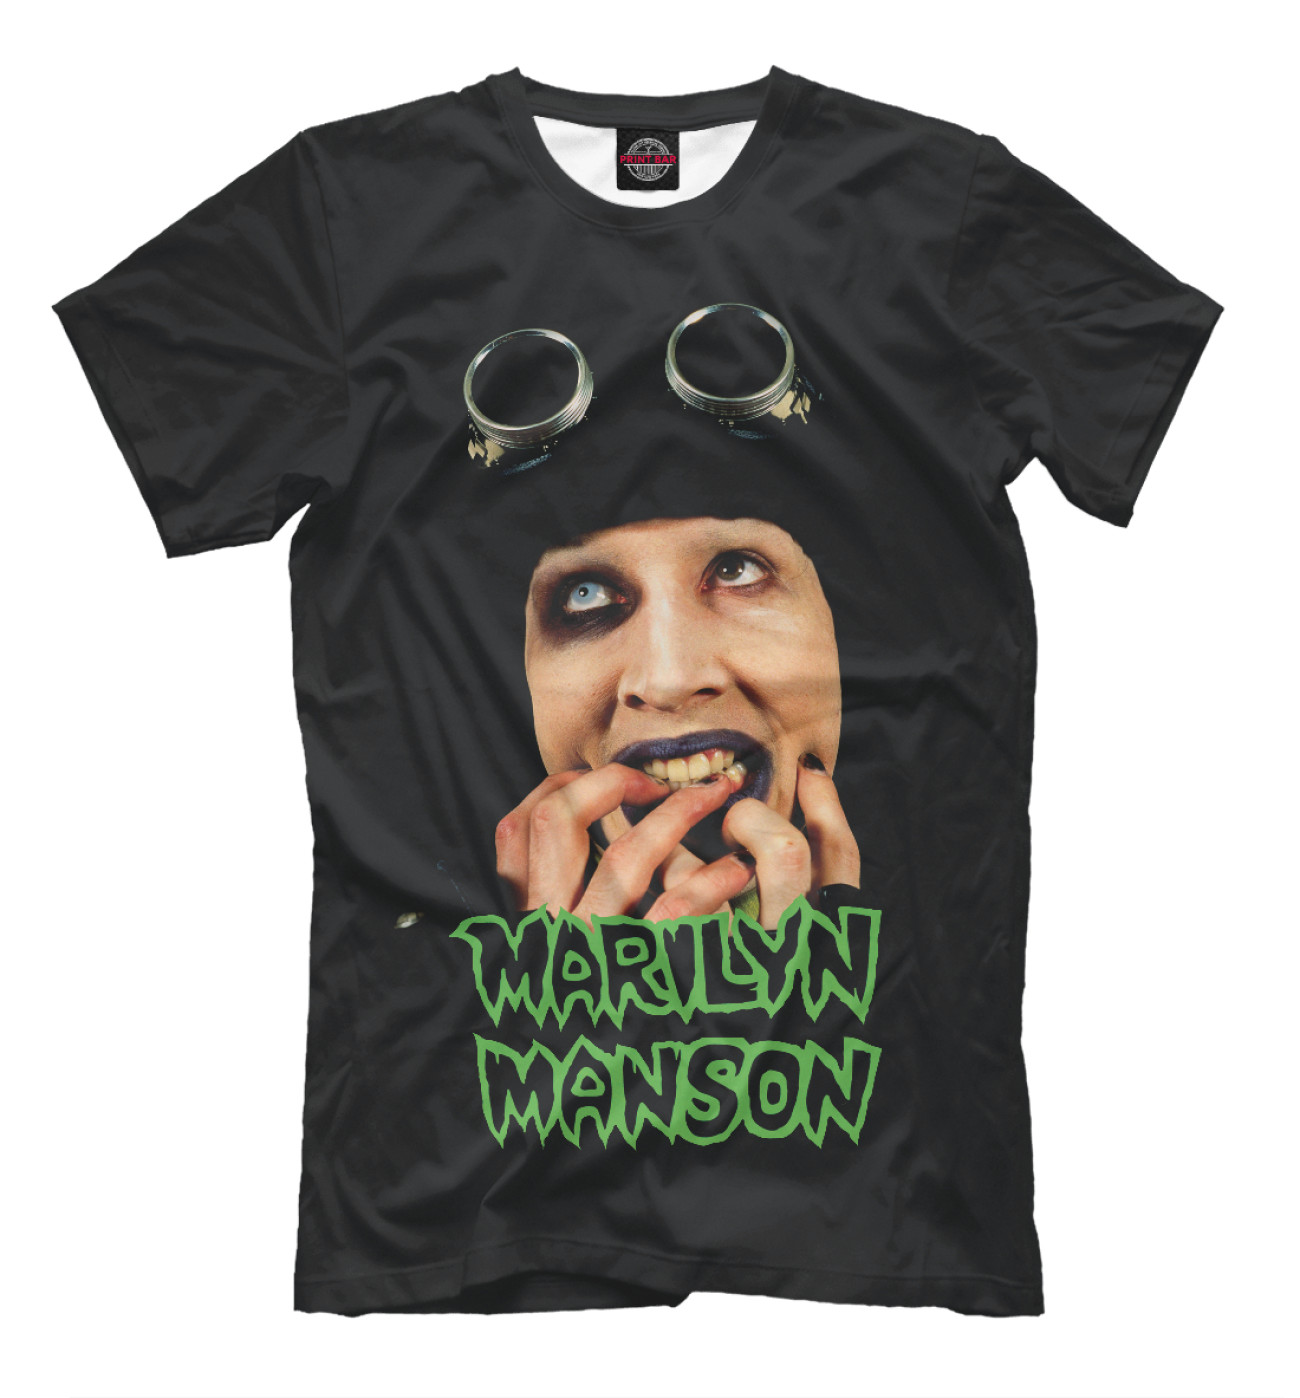 Мужская Футболка Marilyn Manson, артикул: MRM-231556-fut-2